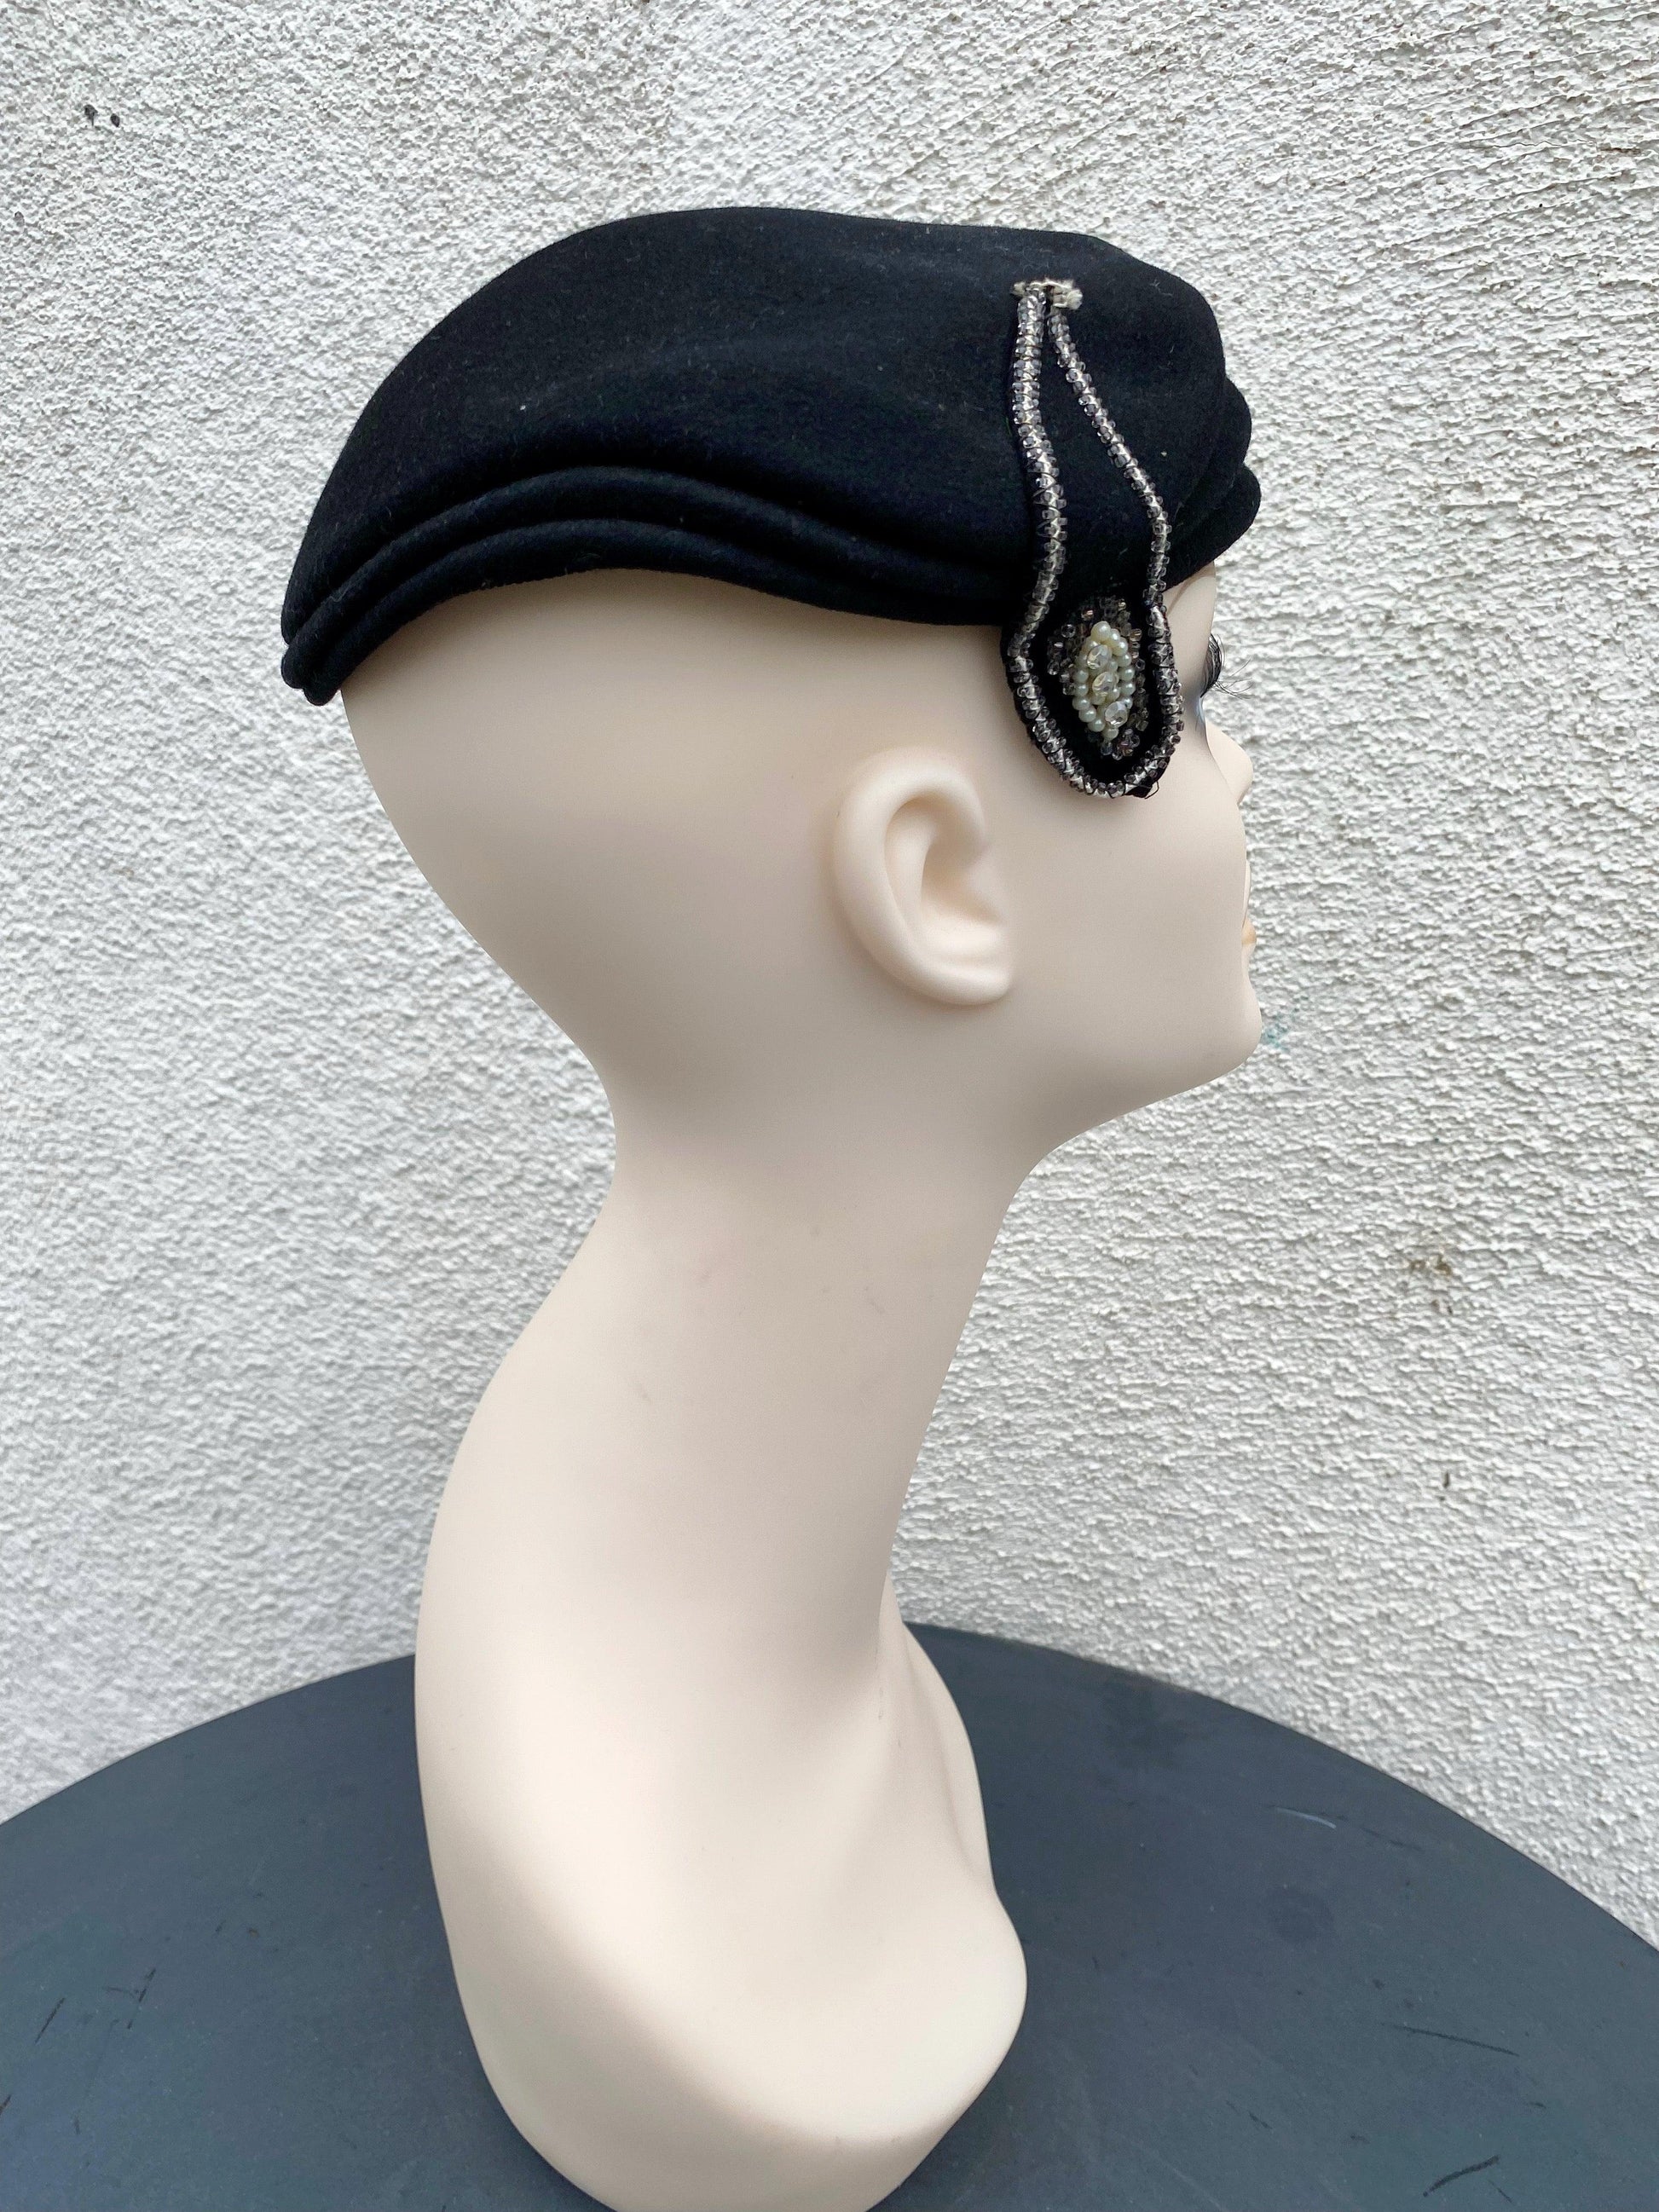 Vintage Black Wool Hat with Rhinestone Embellishments - A Walk Thru Time Vintage